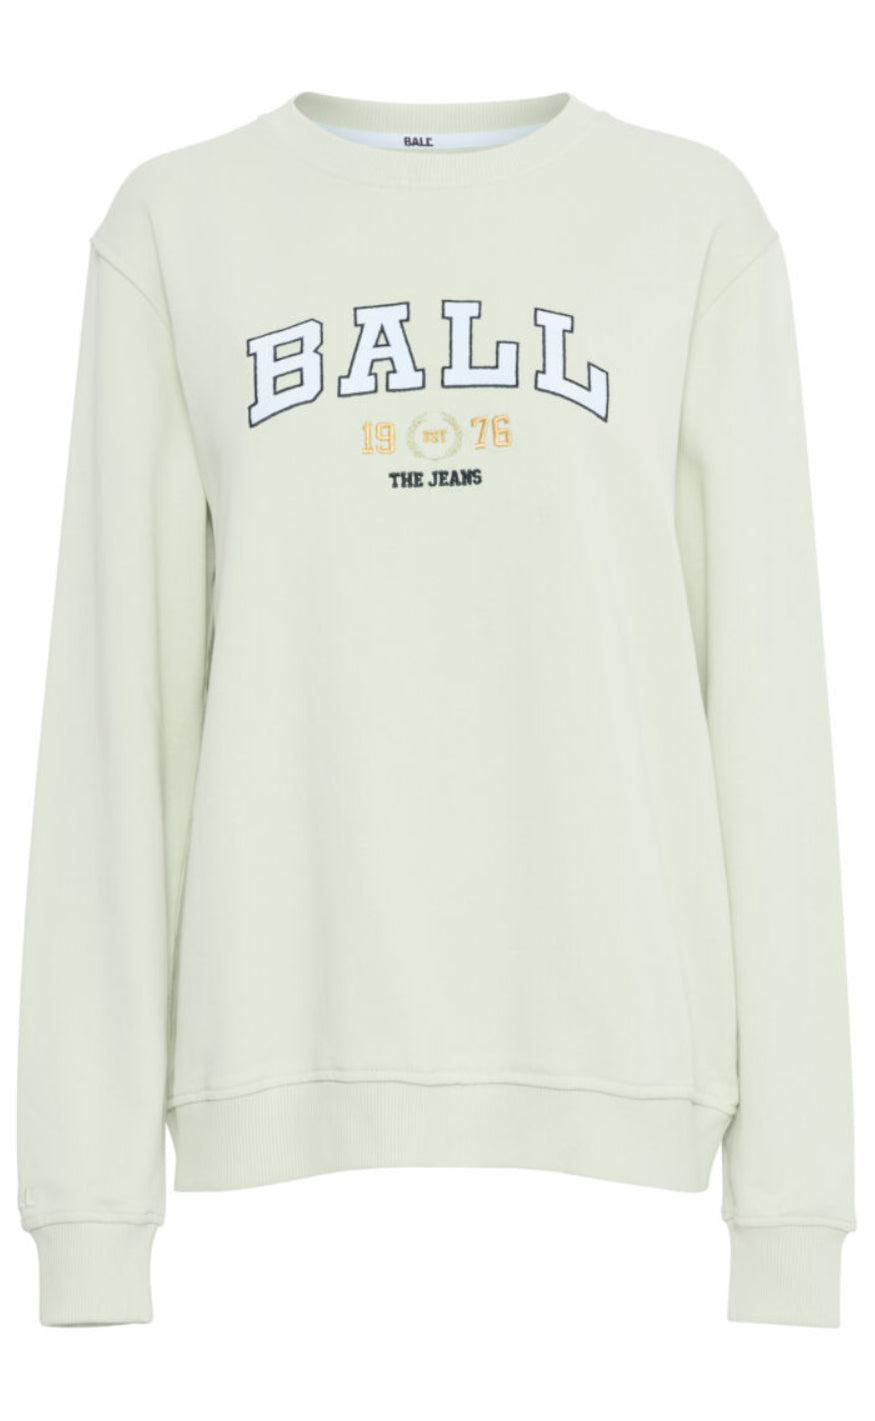 Se BALL Original Sweatshirt - L. Taylor - Pastel Green hos Fashionbystrand